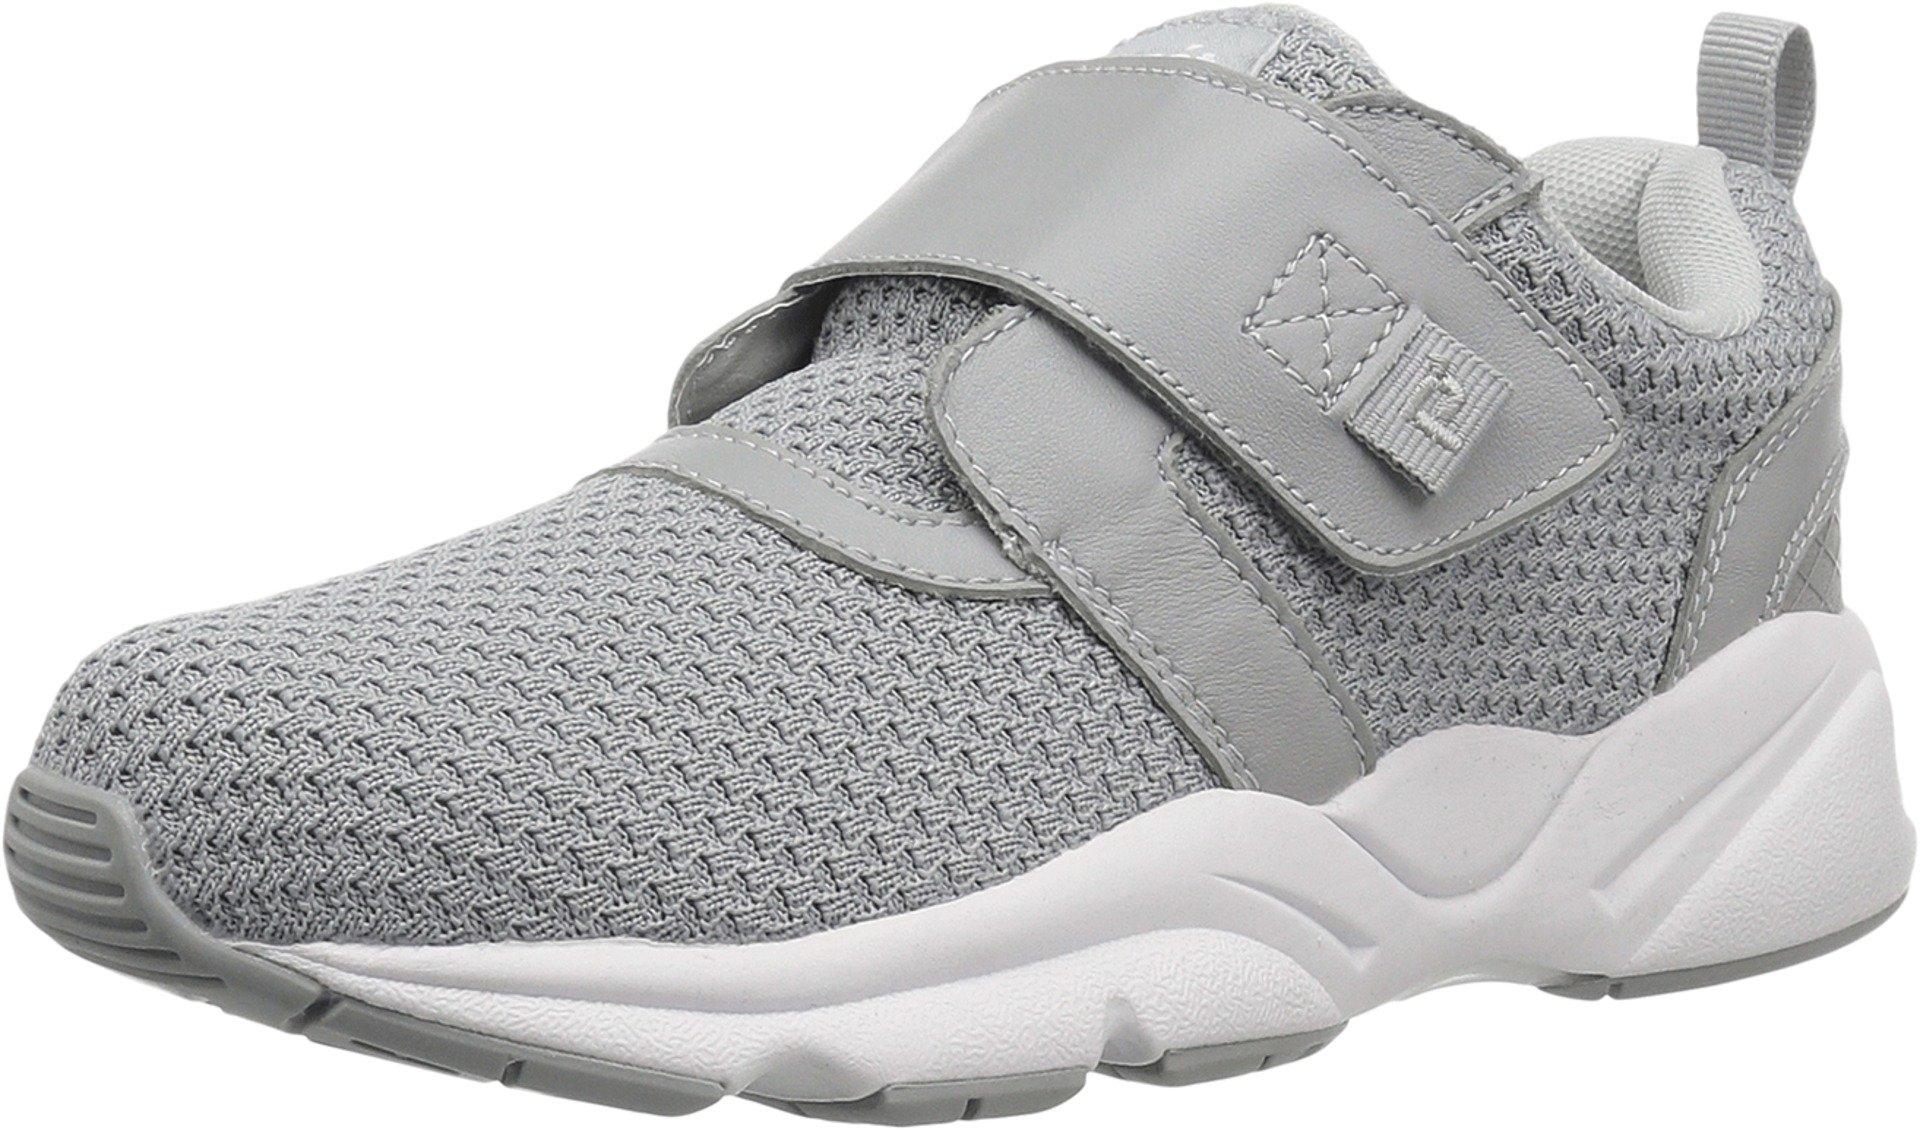 Propet Leather Stability X Strap Walking Shoe in Grey (Gray) for Men - Lyst